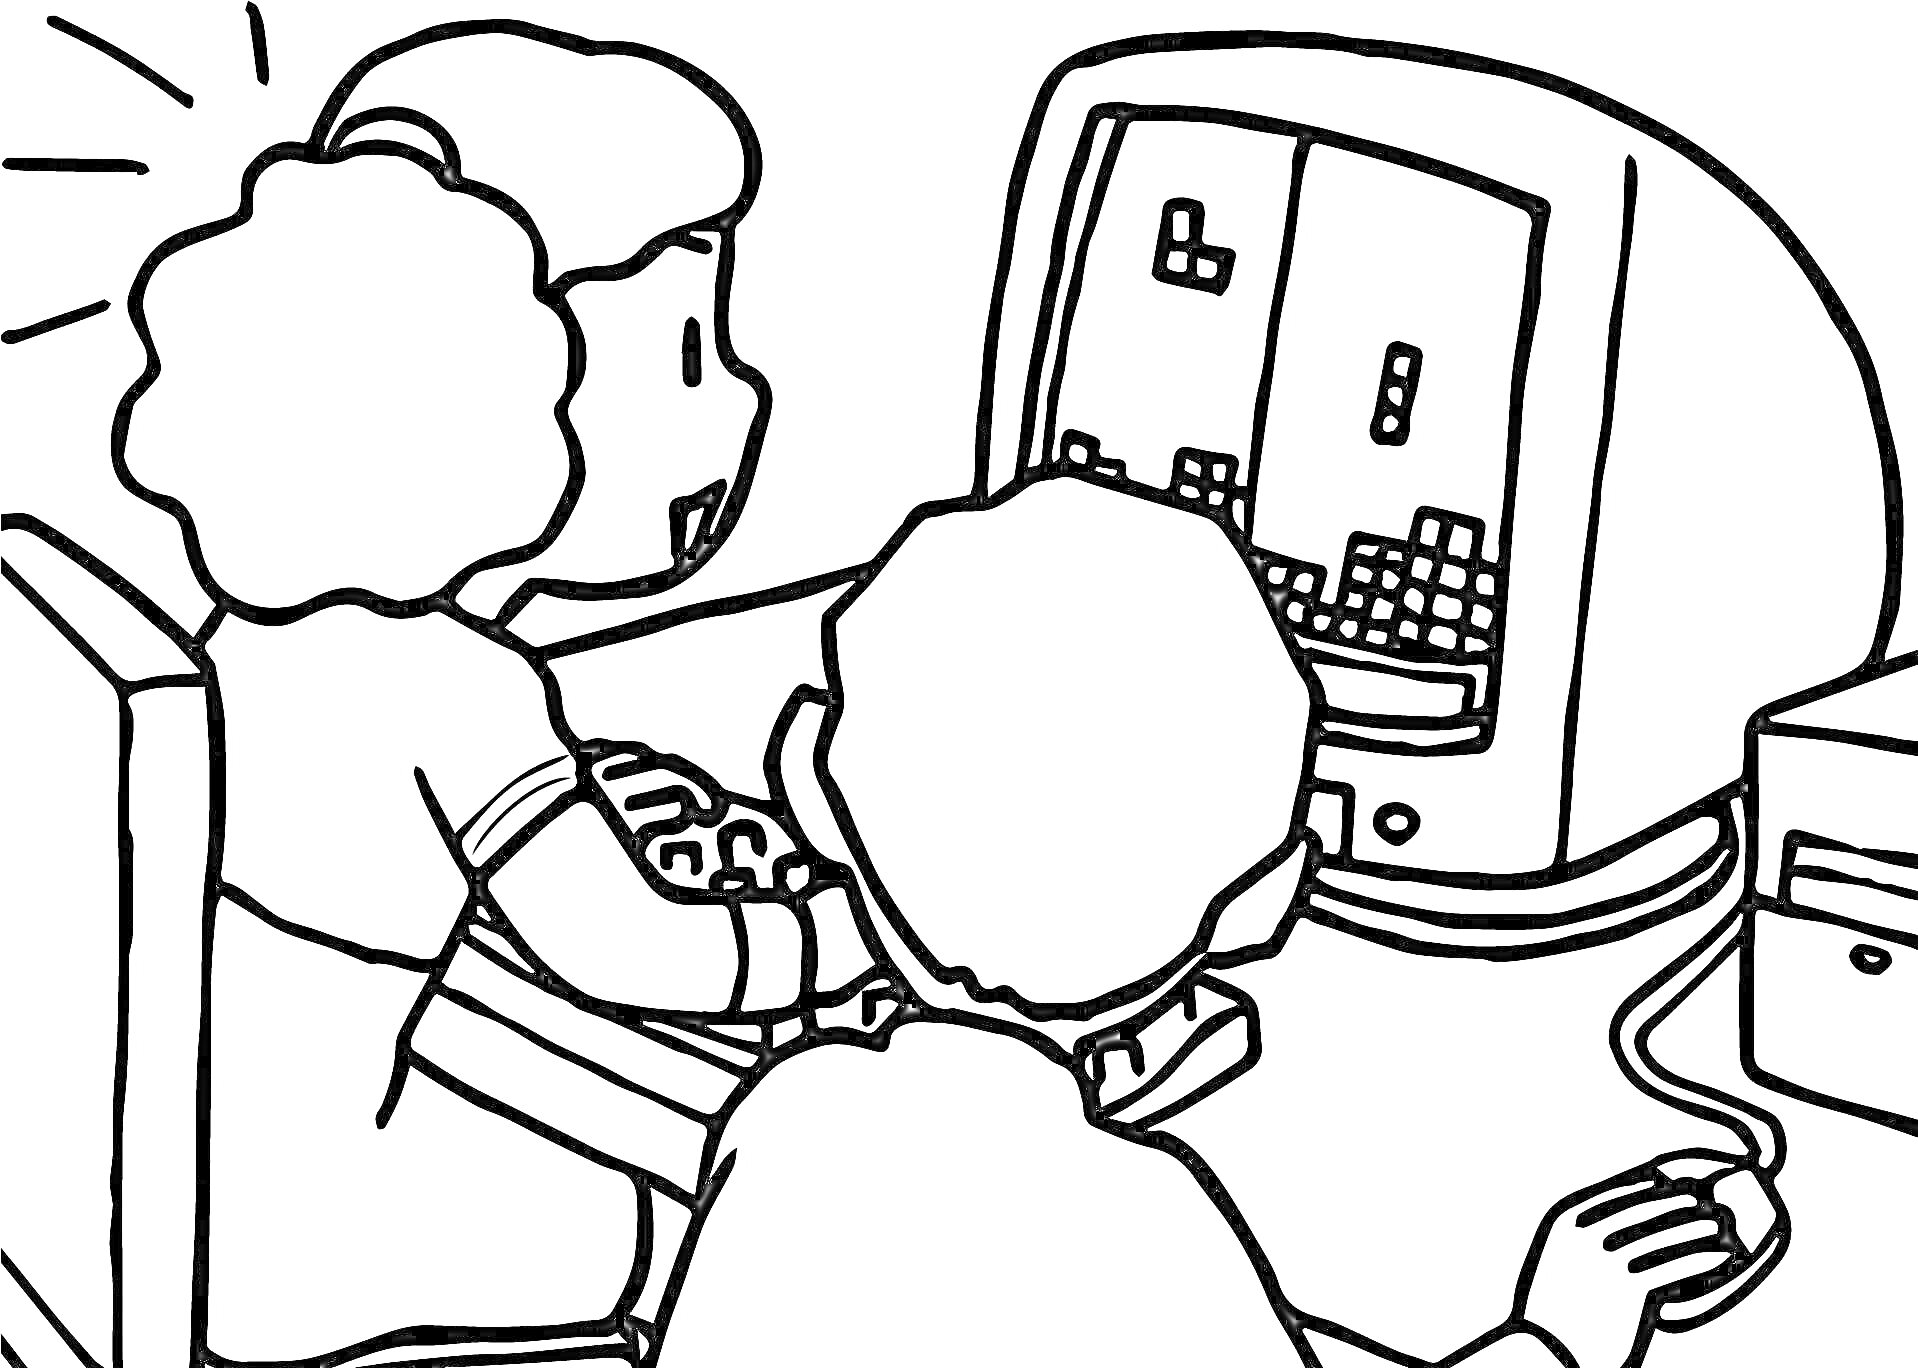 Раскраска Два человека играют в тетрис на компьютере